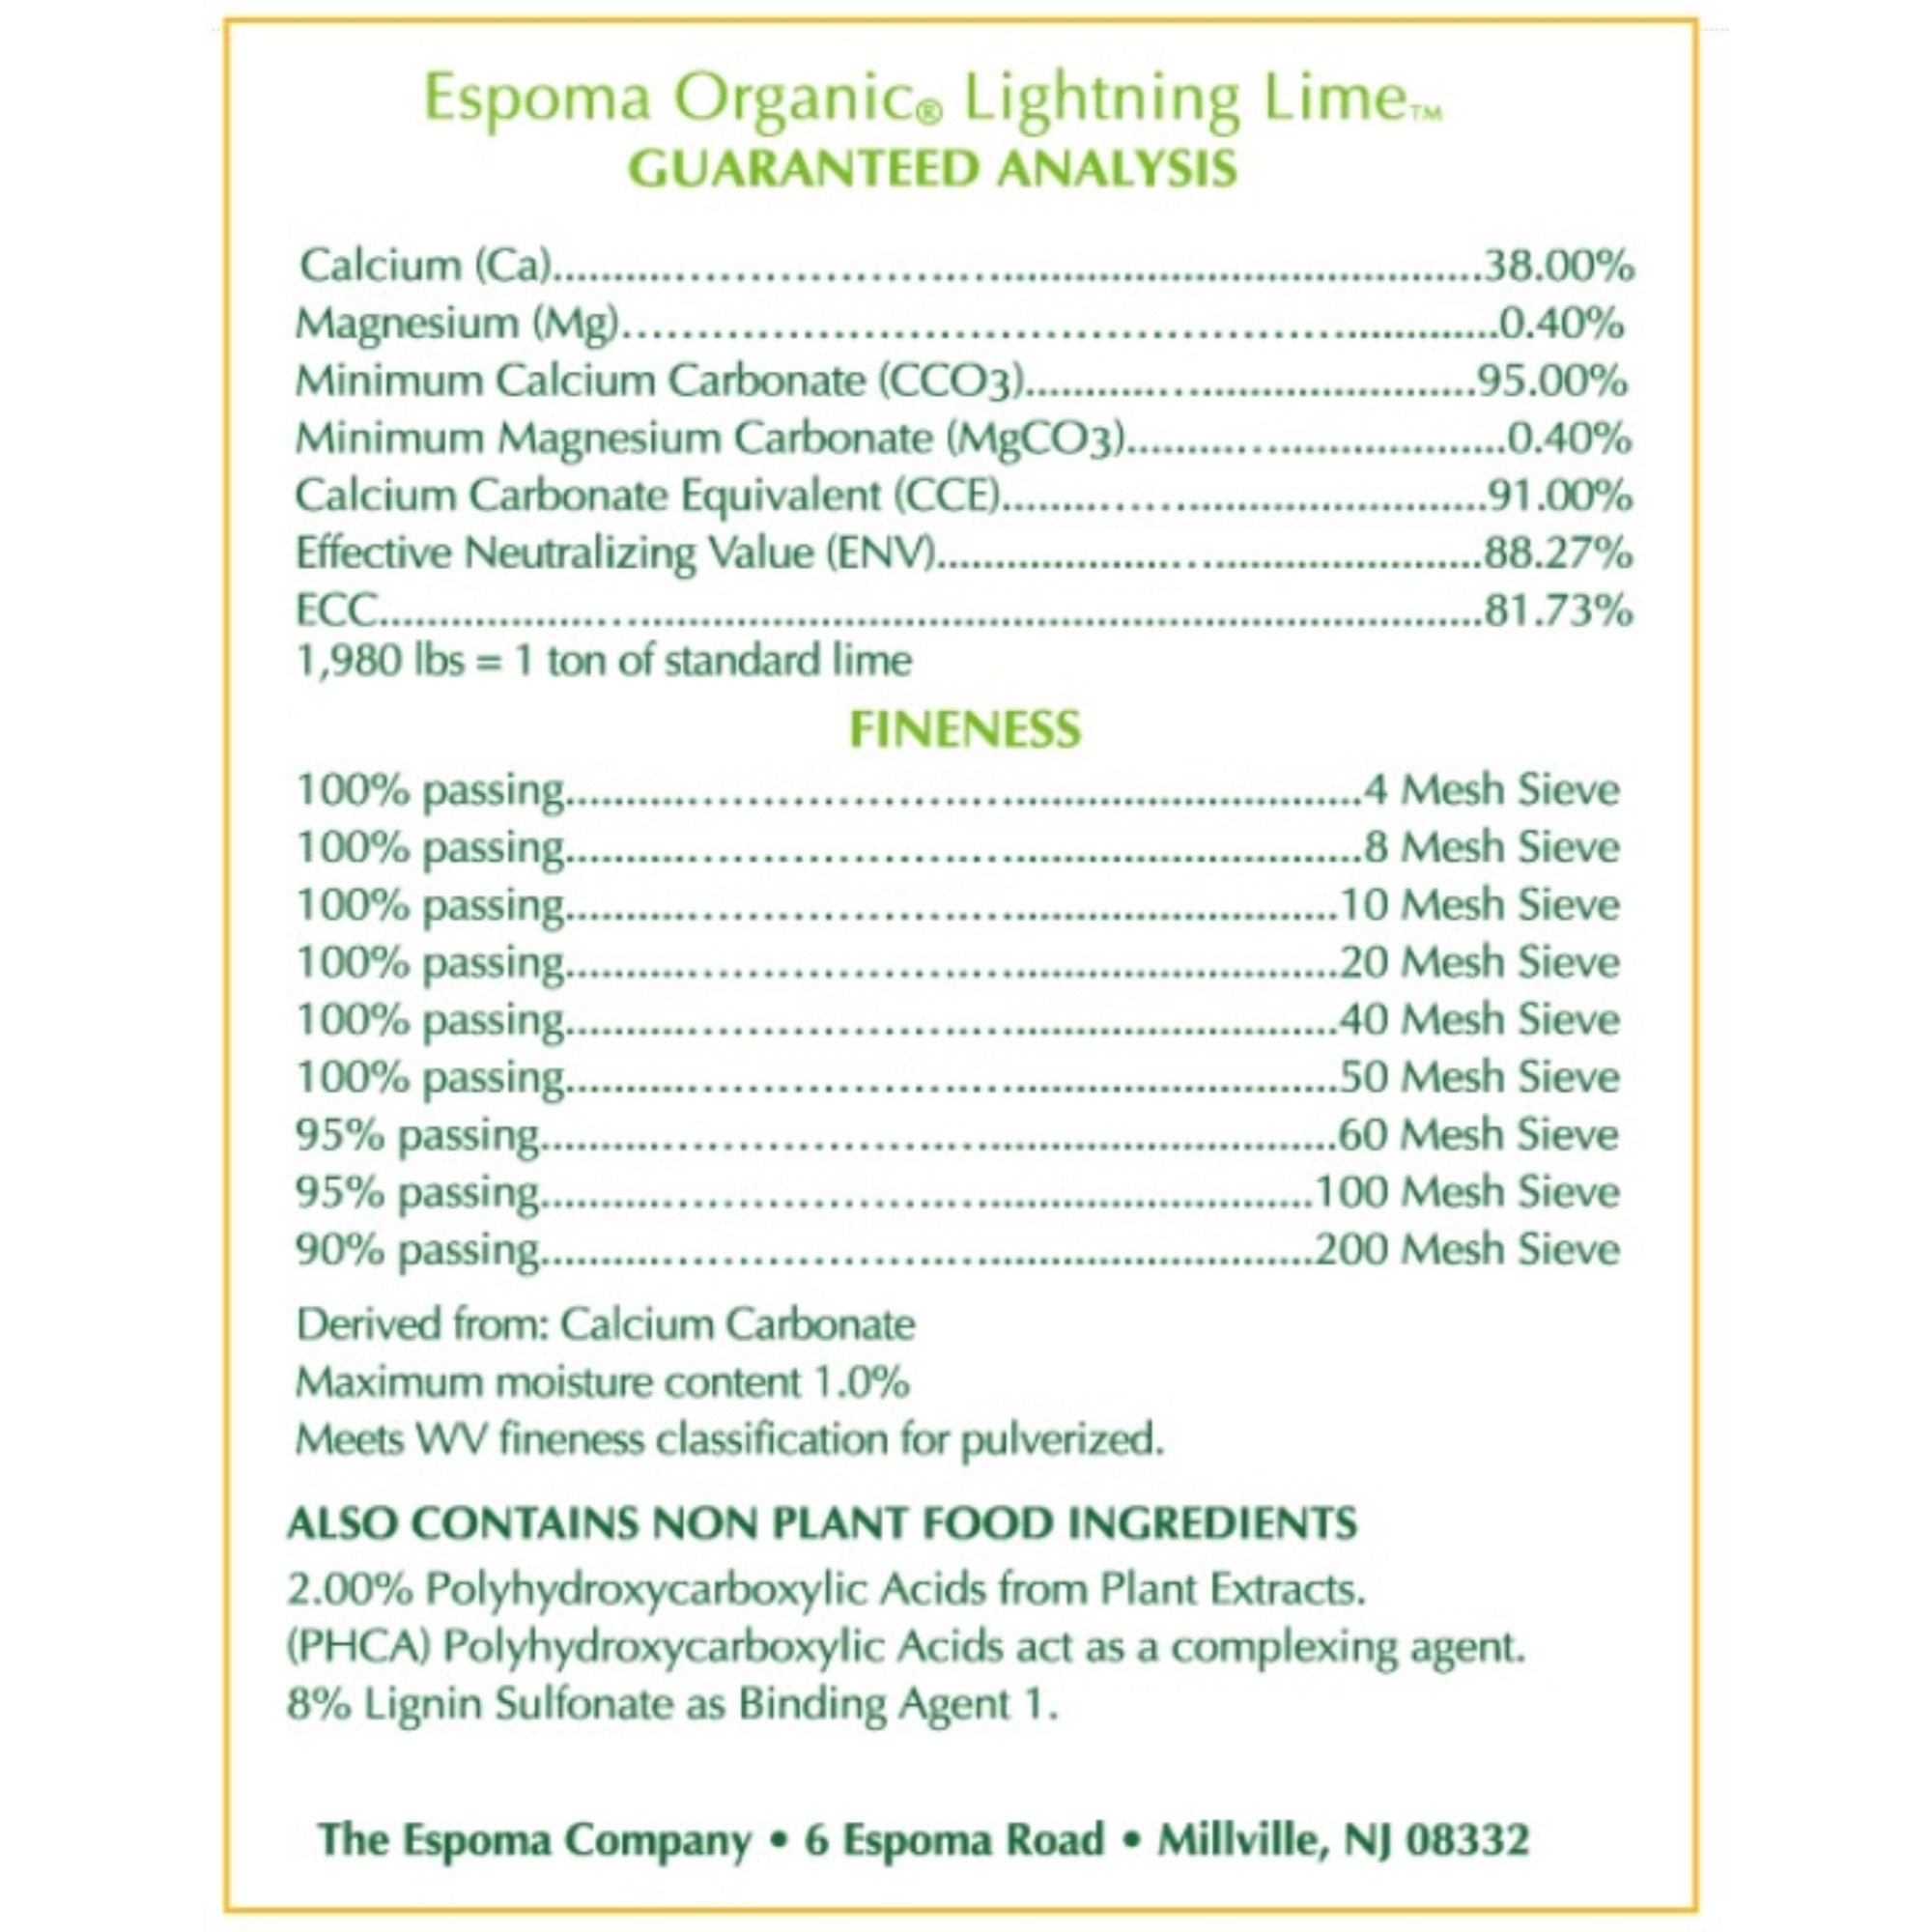 Espoma Organic Lightning Lime Ultra Fast Lime, Helps Grow Greener Lawns, 30 lb Bag